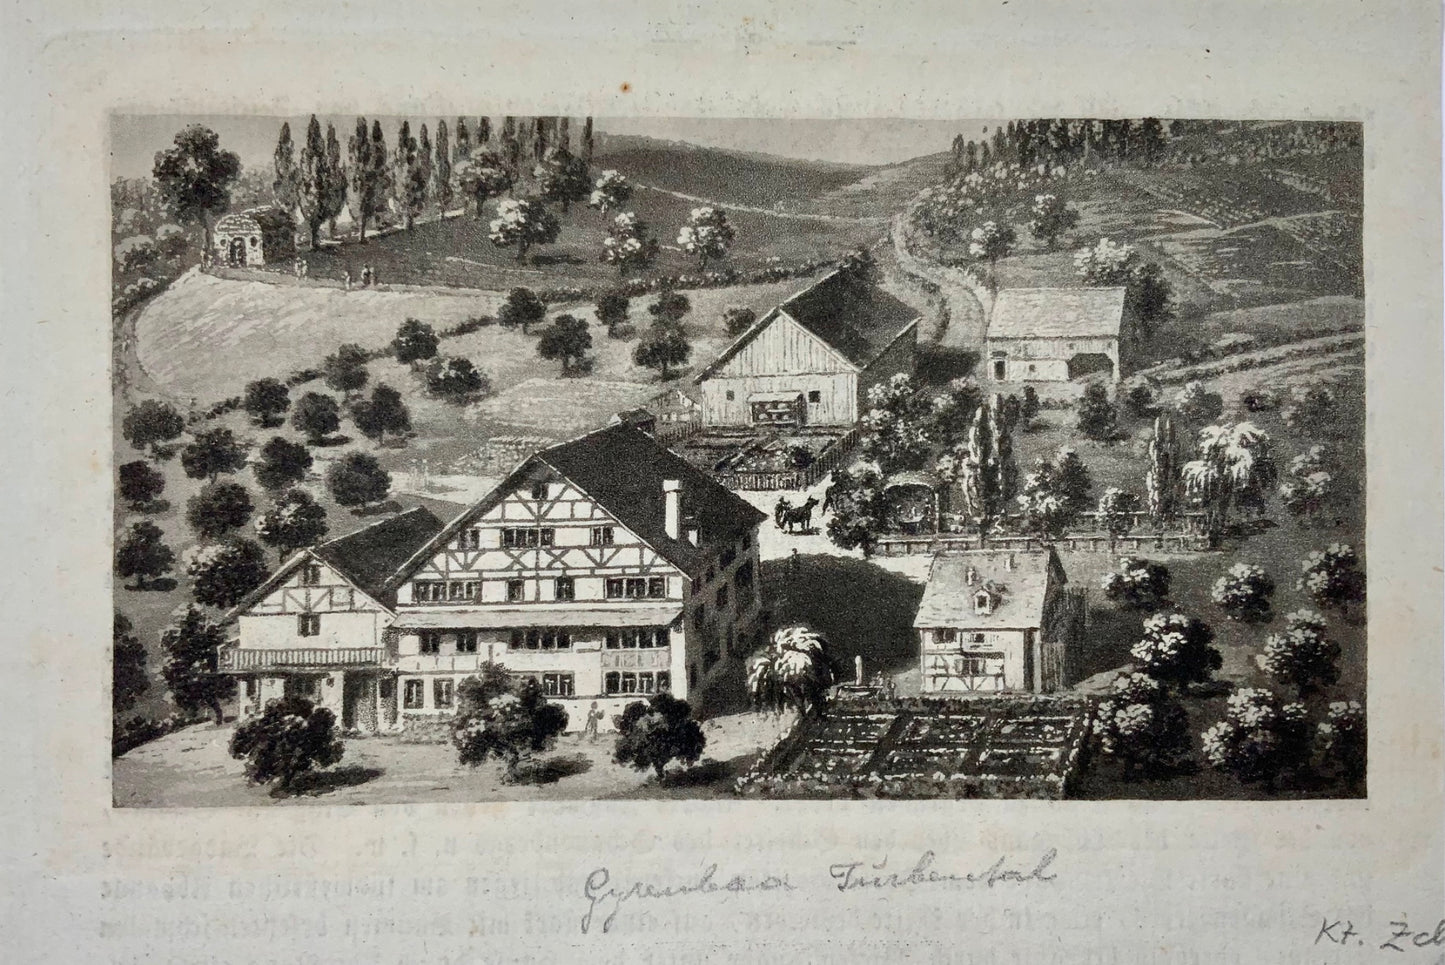 1826 Girenbad, Turbental, Zurich, Switzerland, fine aquatint